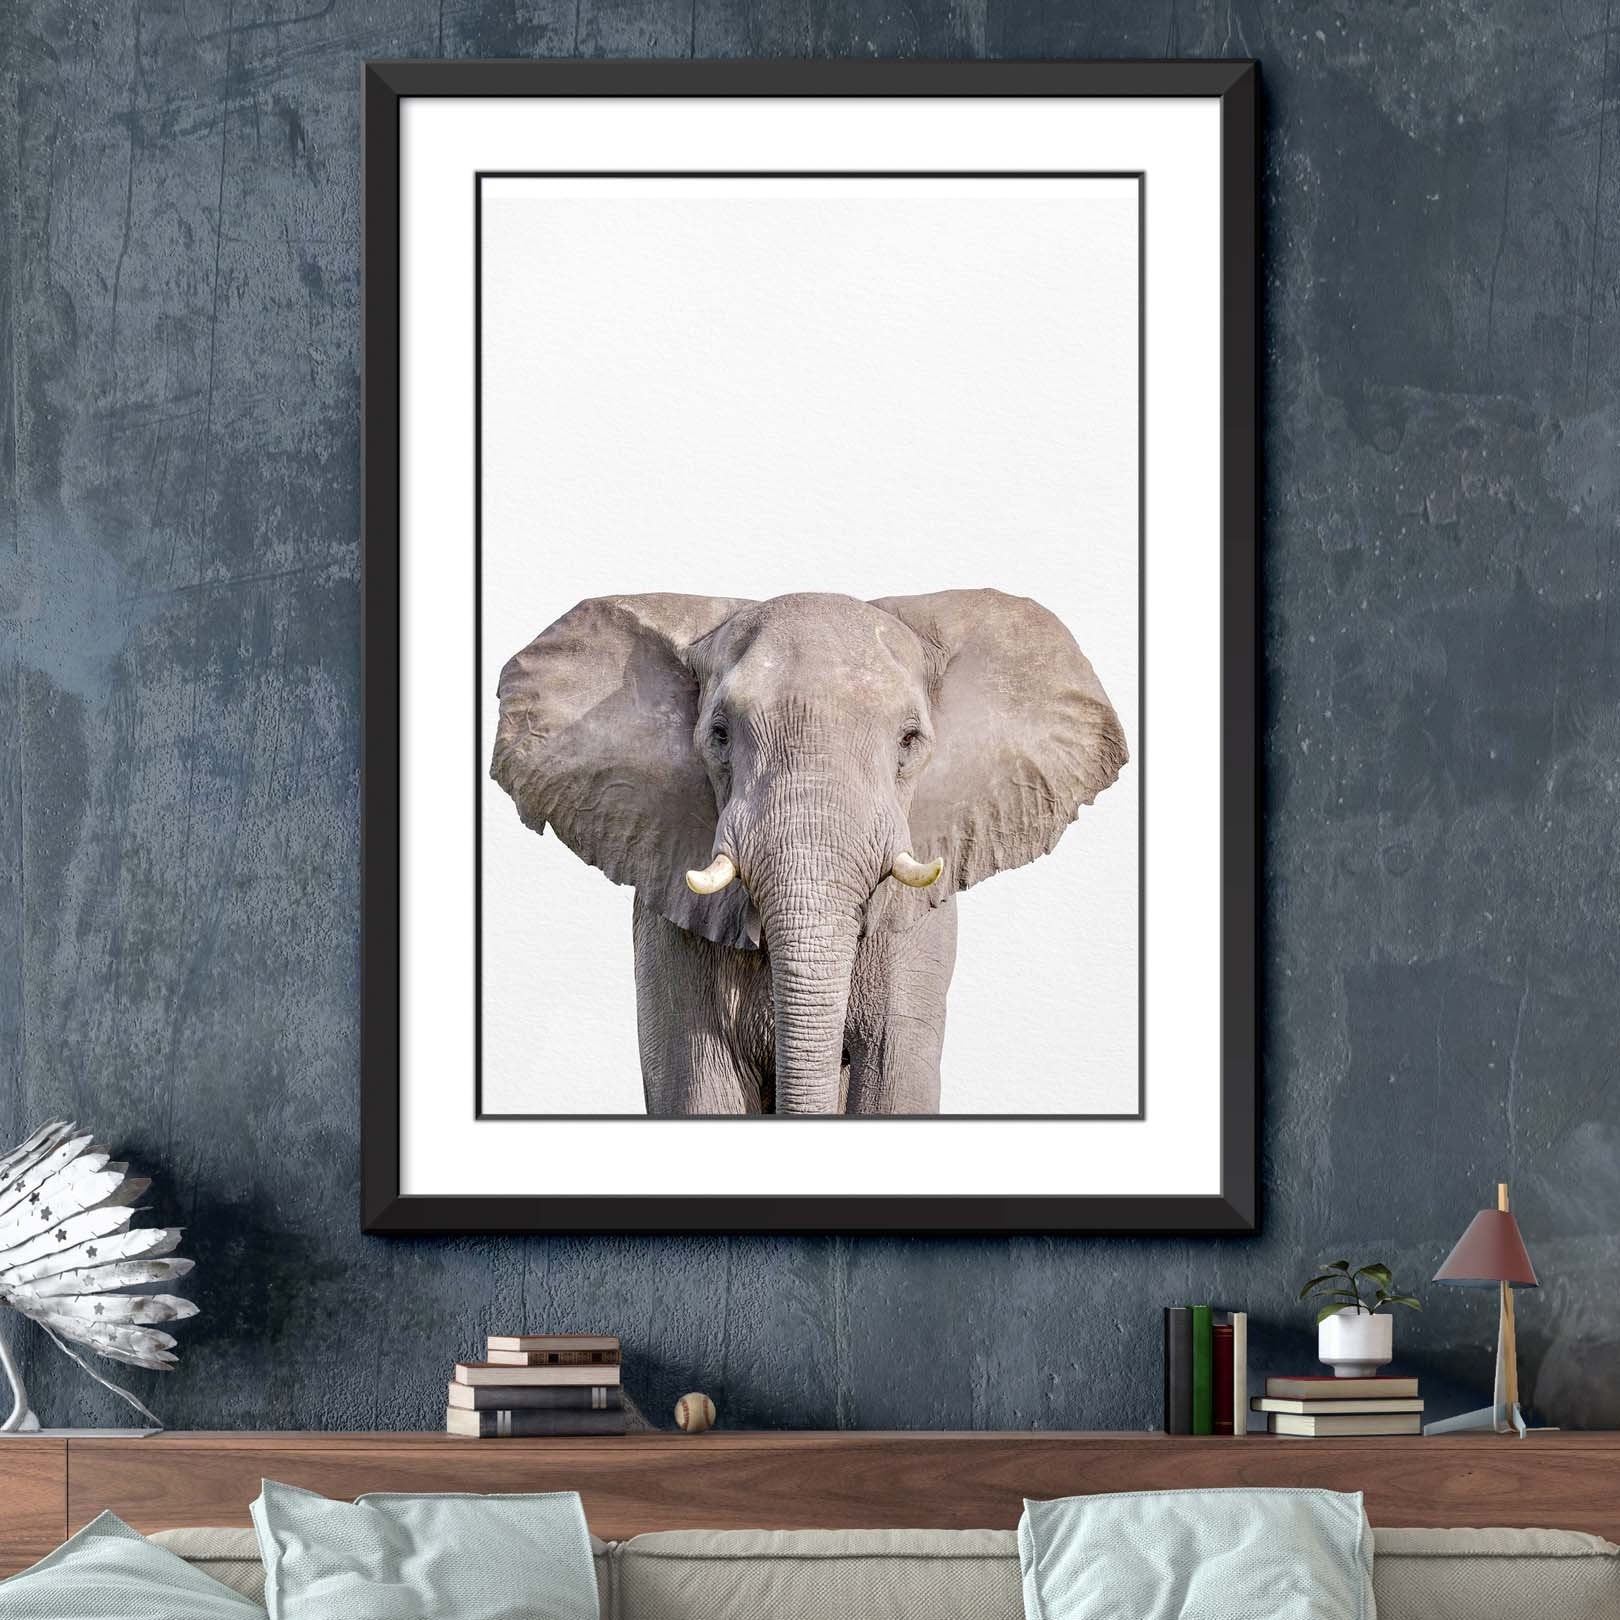 Elephant Print, Elephant Wall Art, Elephant Decor, Living Room Art, Farmhouse Wall Decor, Farmhouse Art, Elephant Wall Decor,